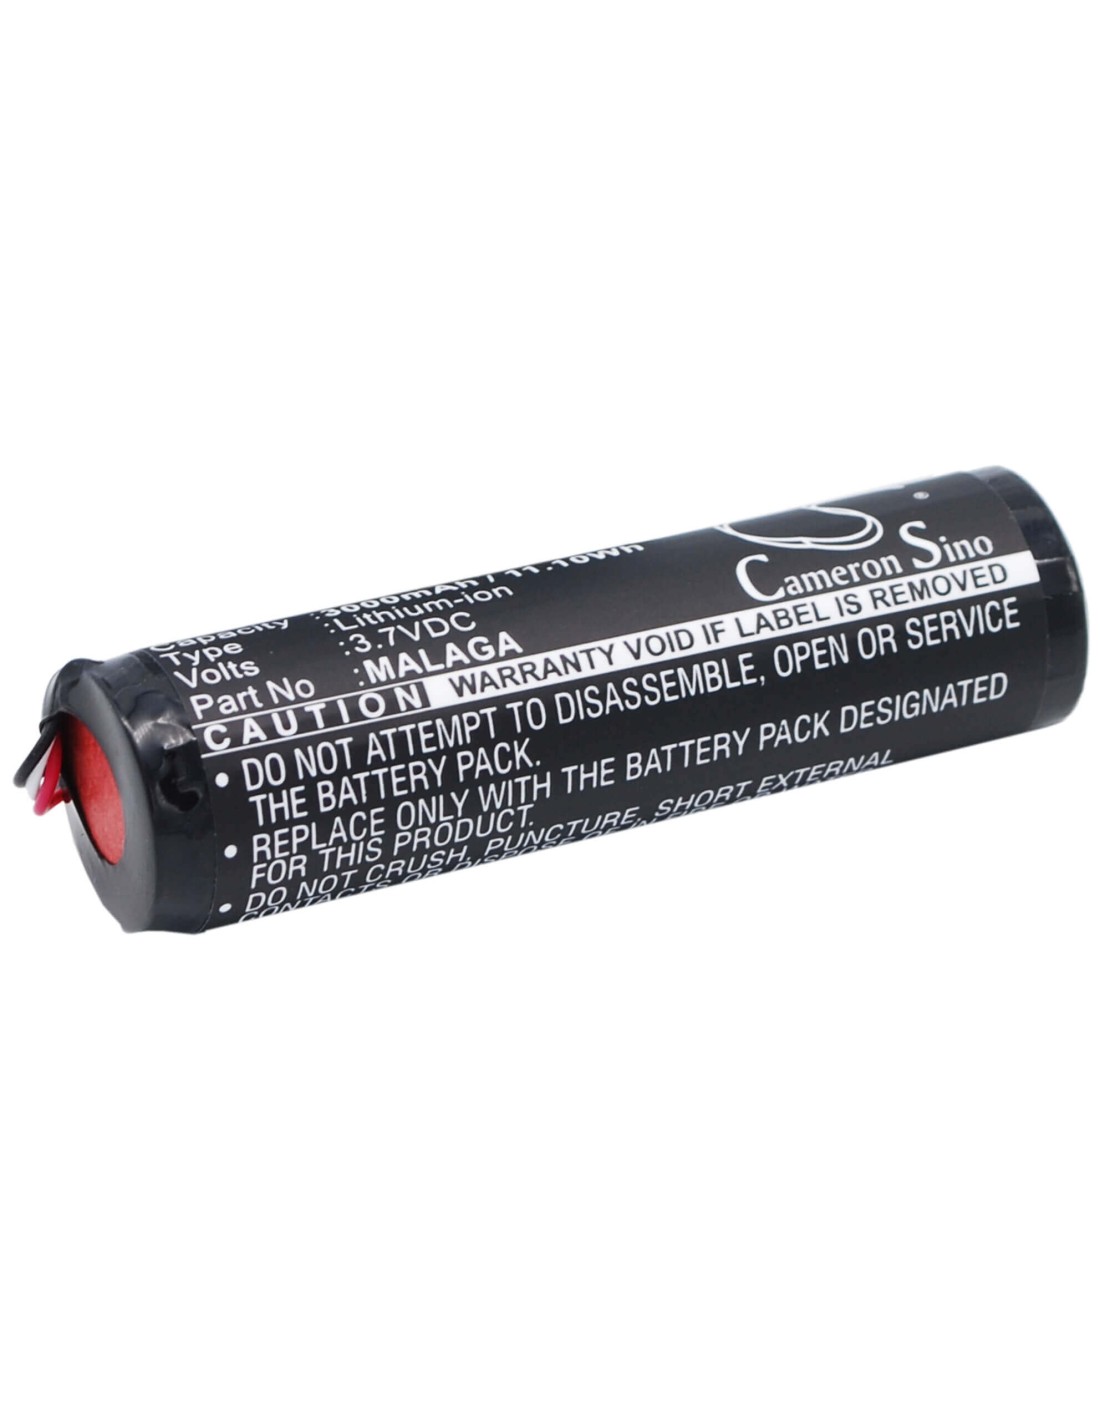 Battery for Tomtom 4gc01, Urban Rider, Urban Rider Pro 3.7V, 3000mAh - 11.10Wh